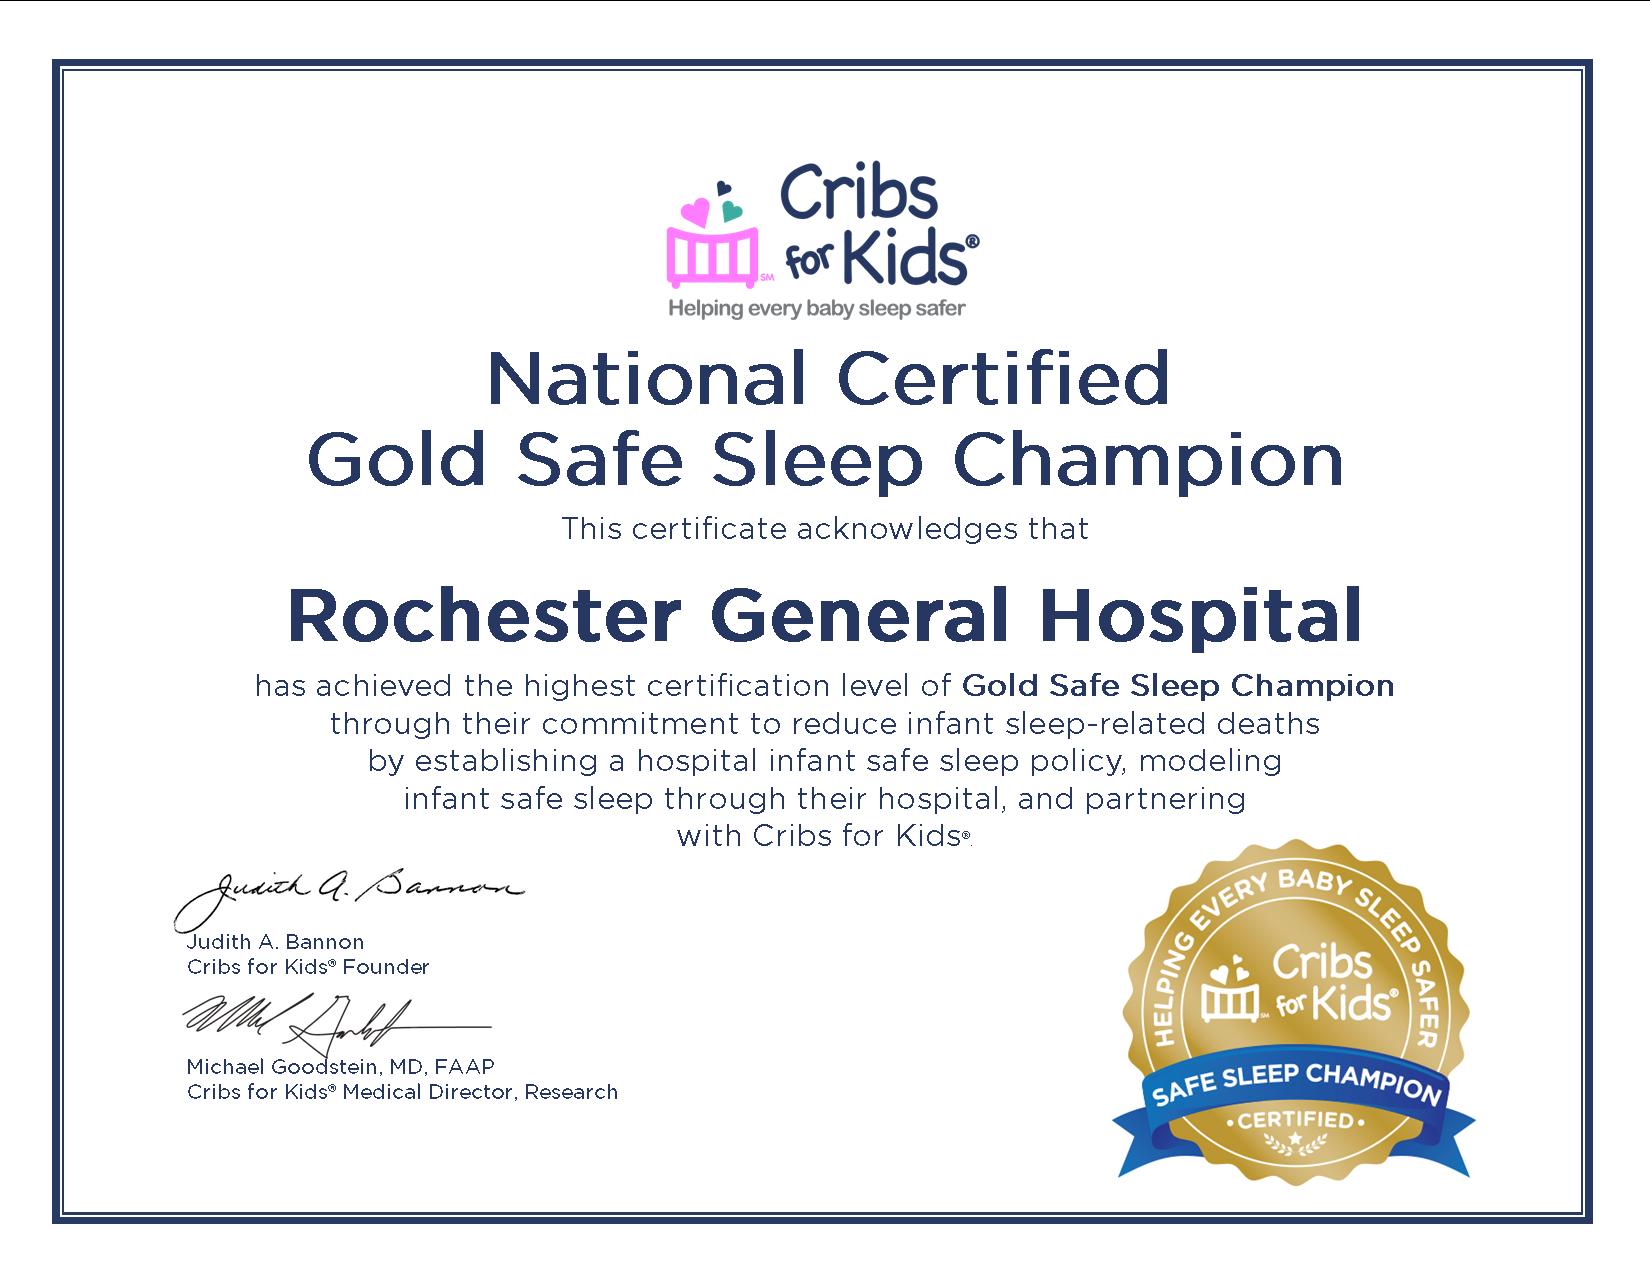 Gold Safe Sleep Certification seal